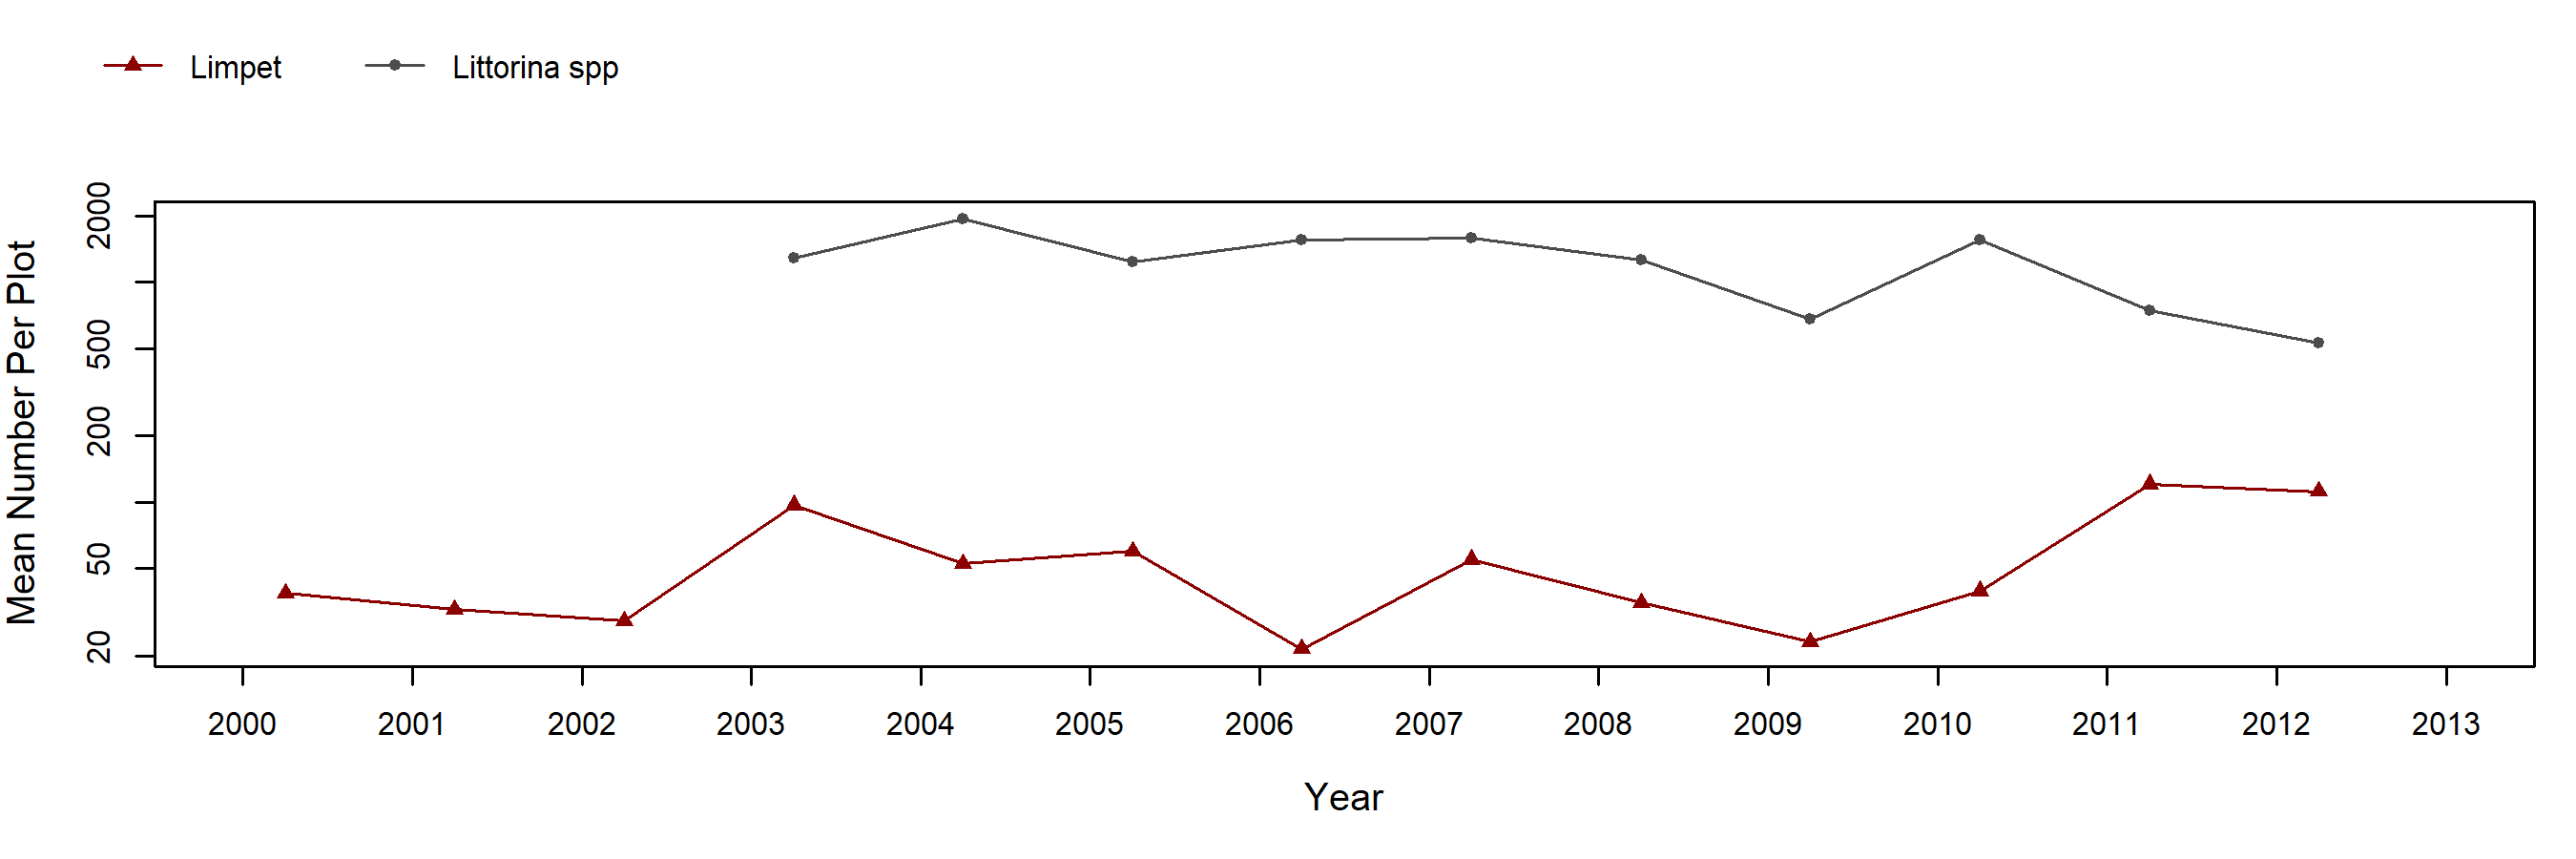 Fogarty Creek Pelvetiopsis trend plot